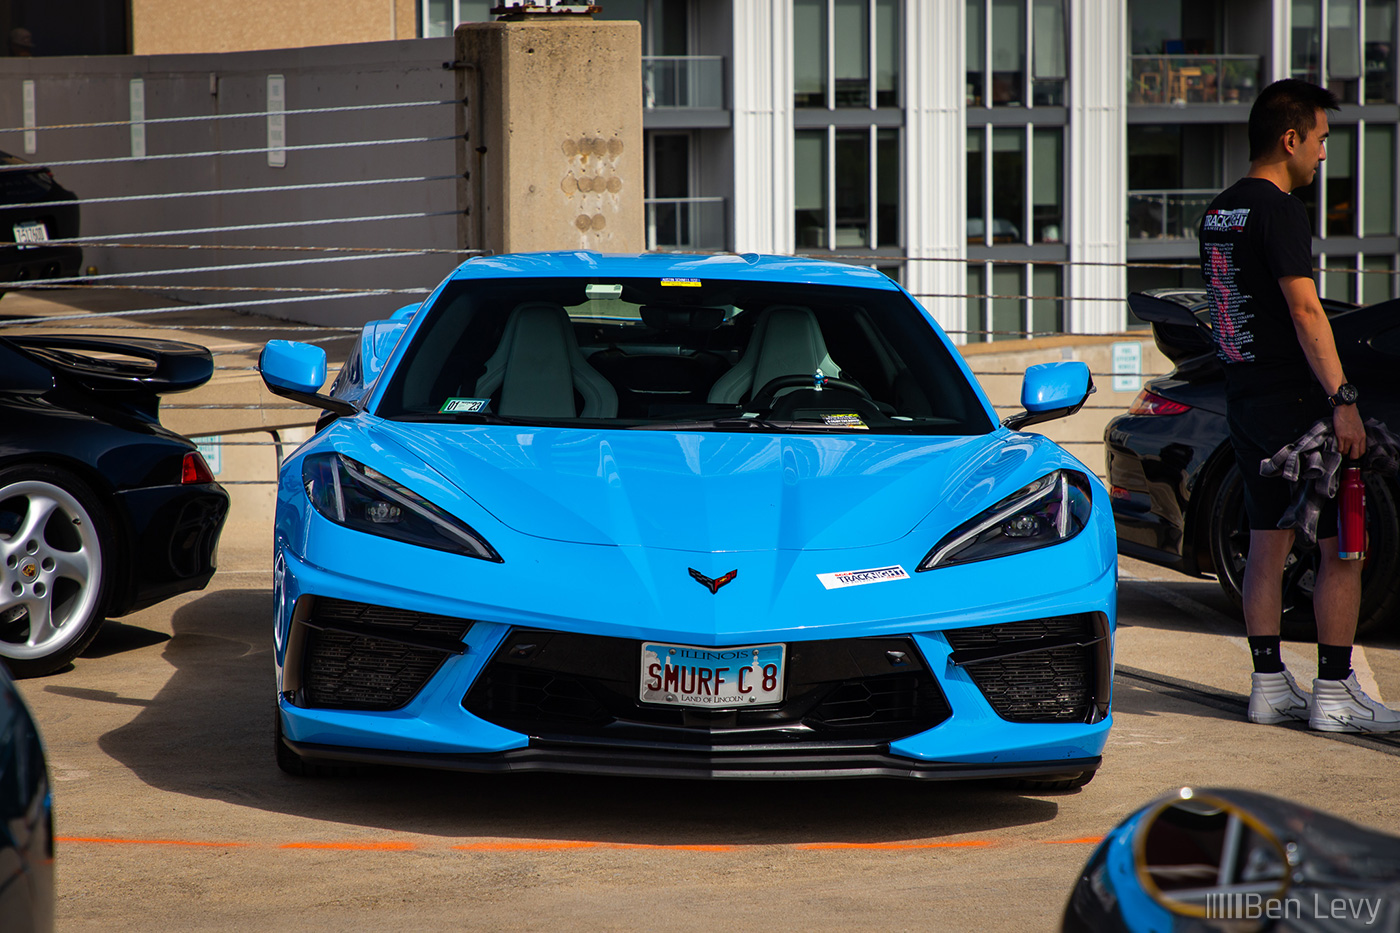 Smurf C8, Blue Corvette in Chicago